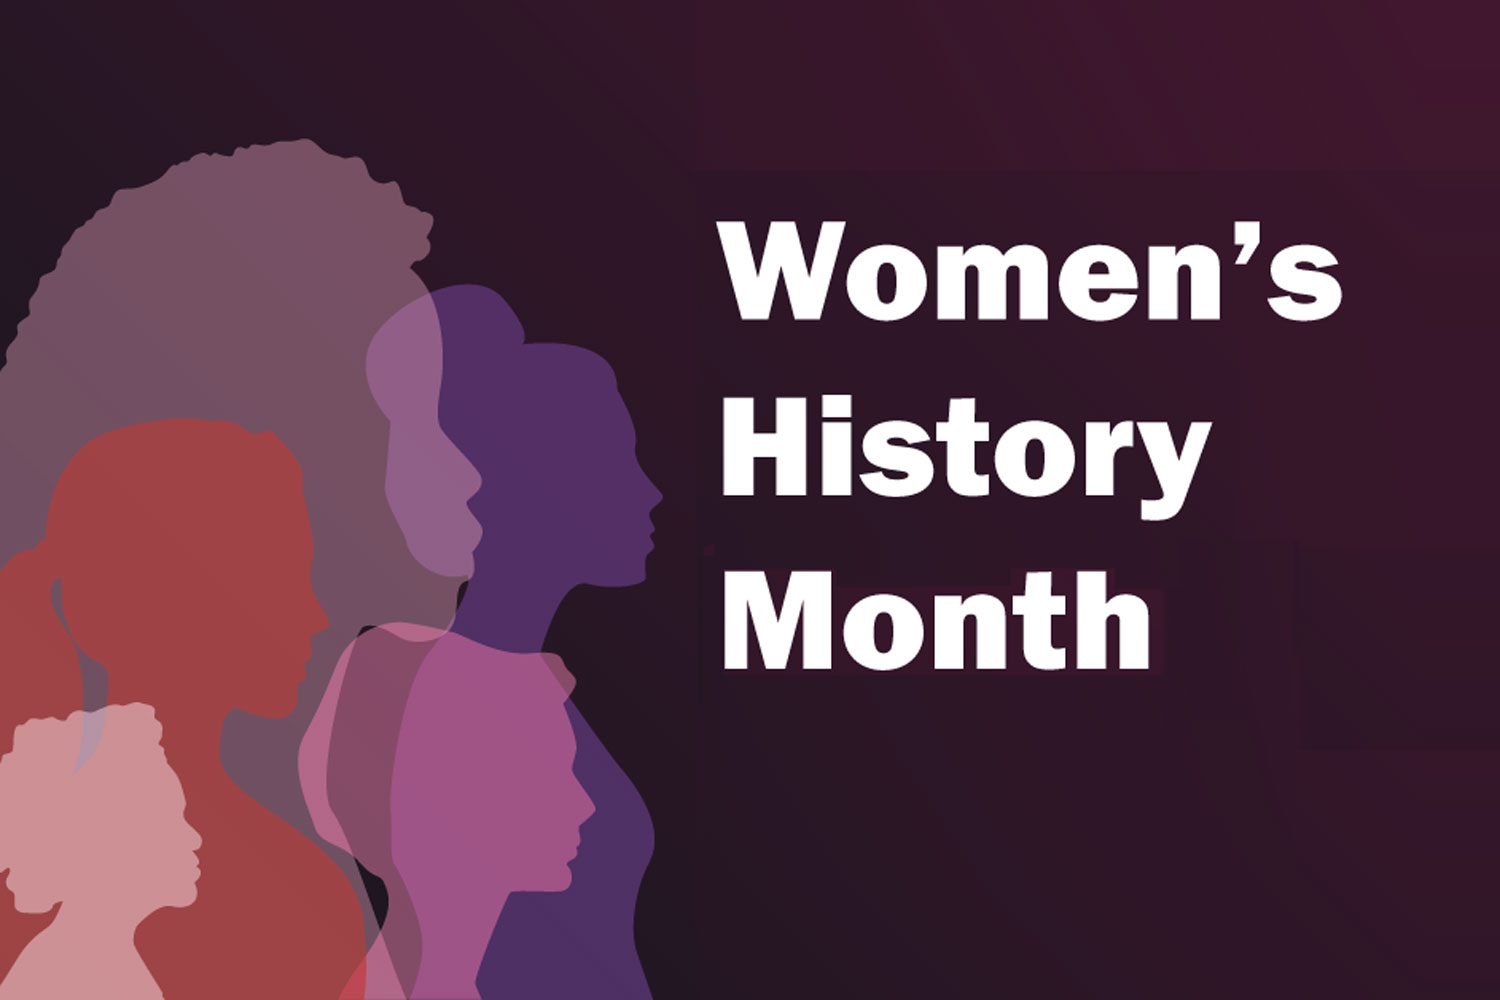 Women's History Month illustration of women's profiles